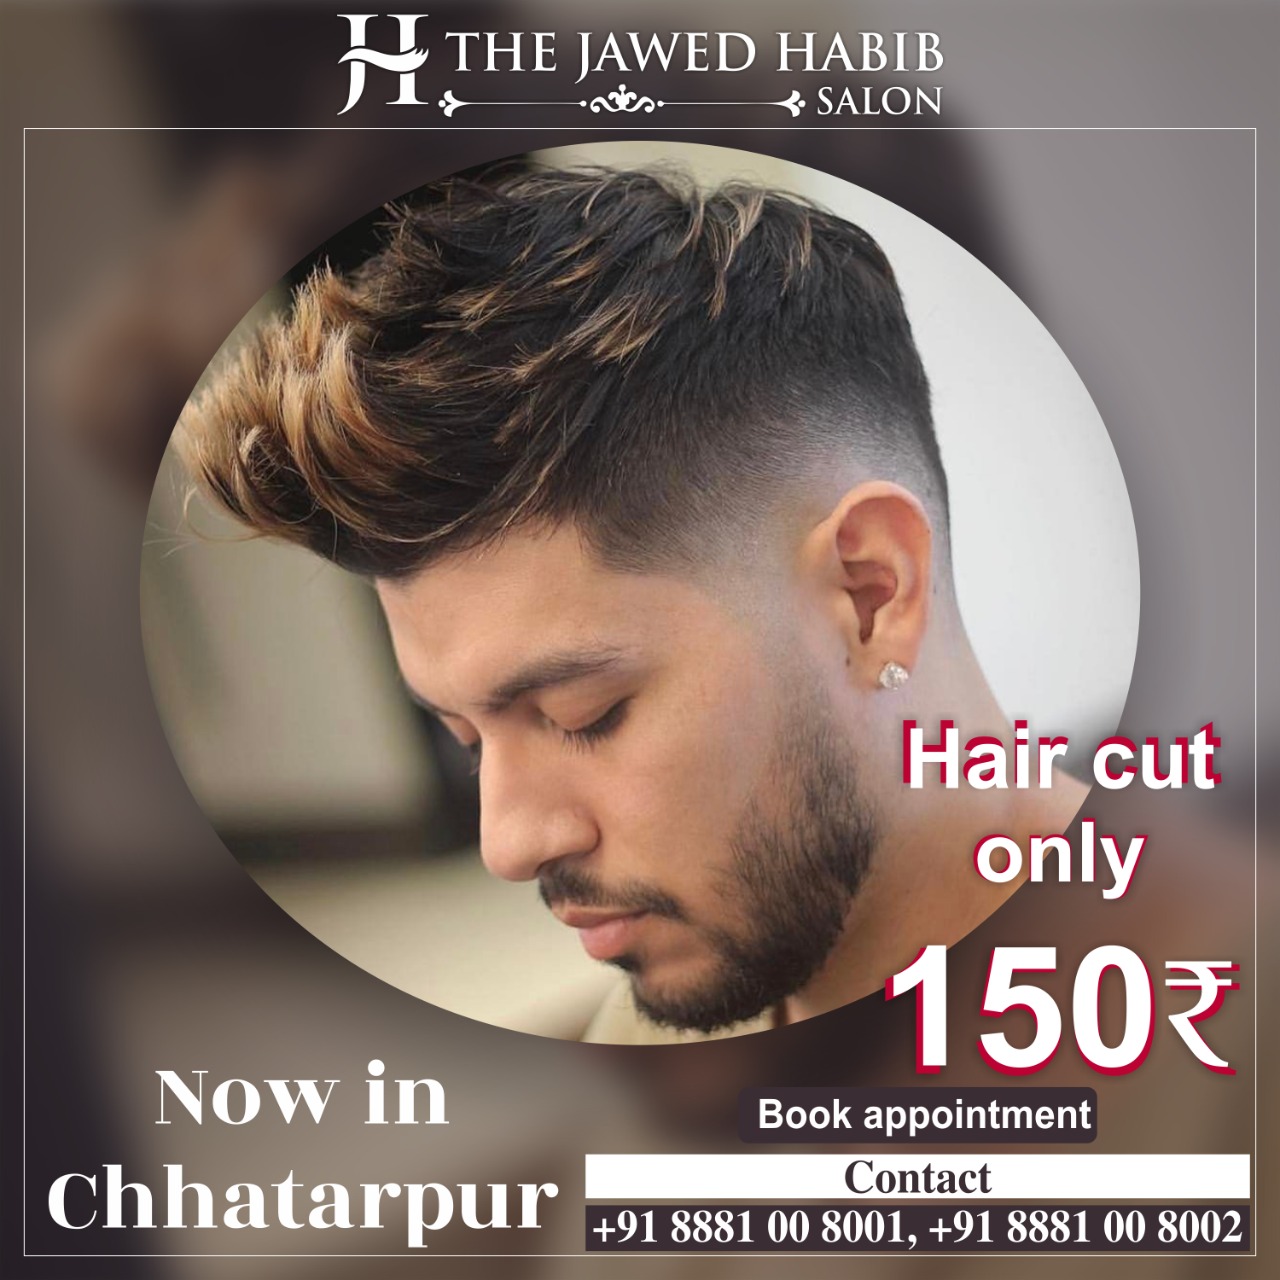 The Jawed Habib SaLon Chhatarpur (@jawed_salon) / Twitter